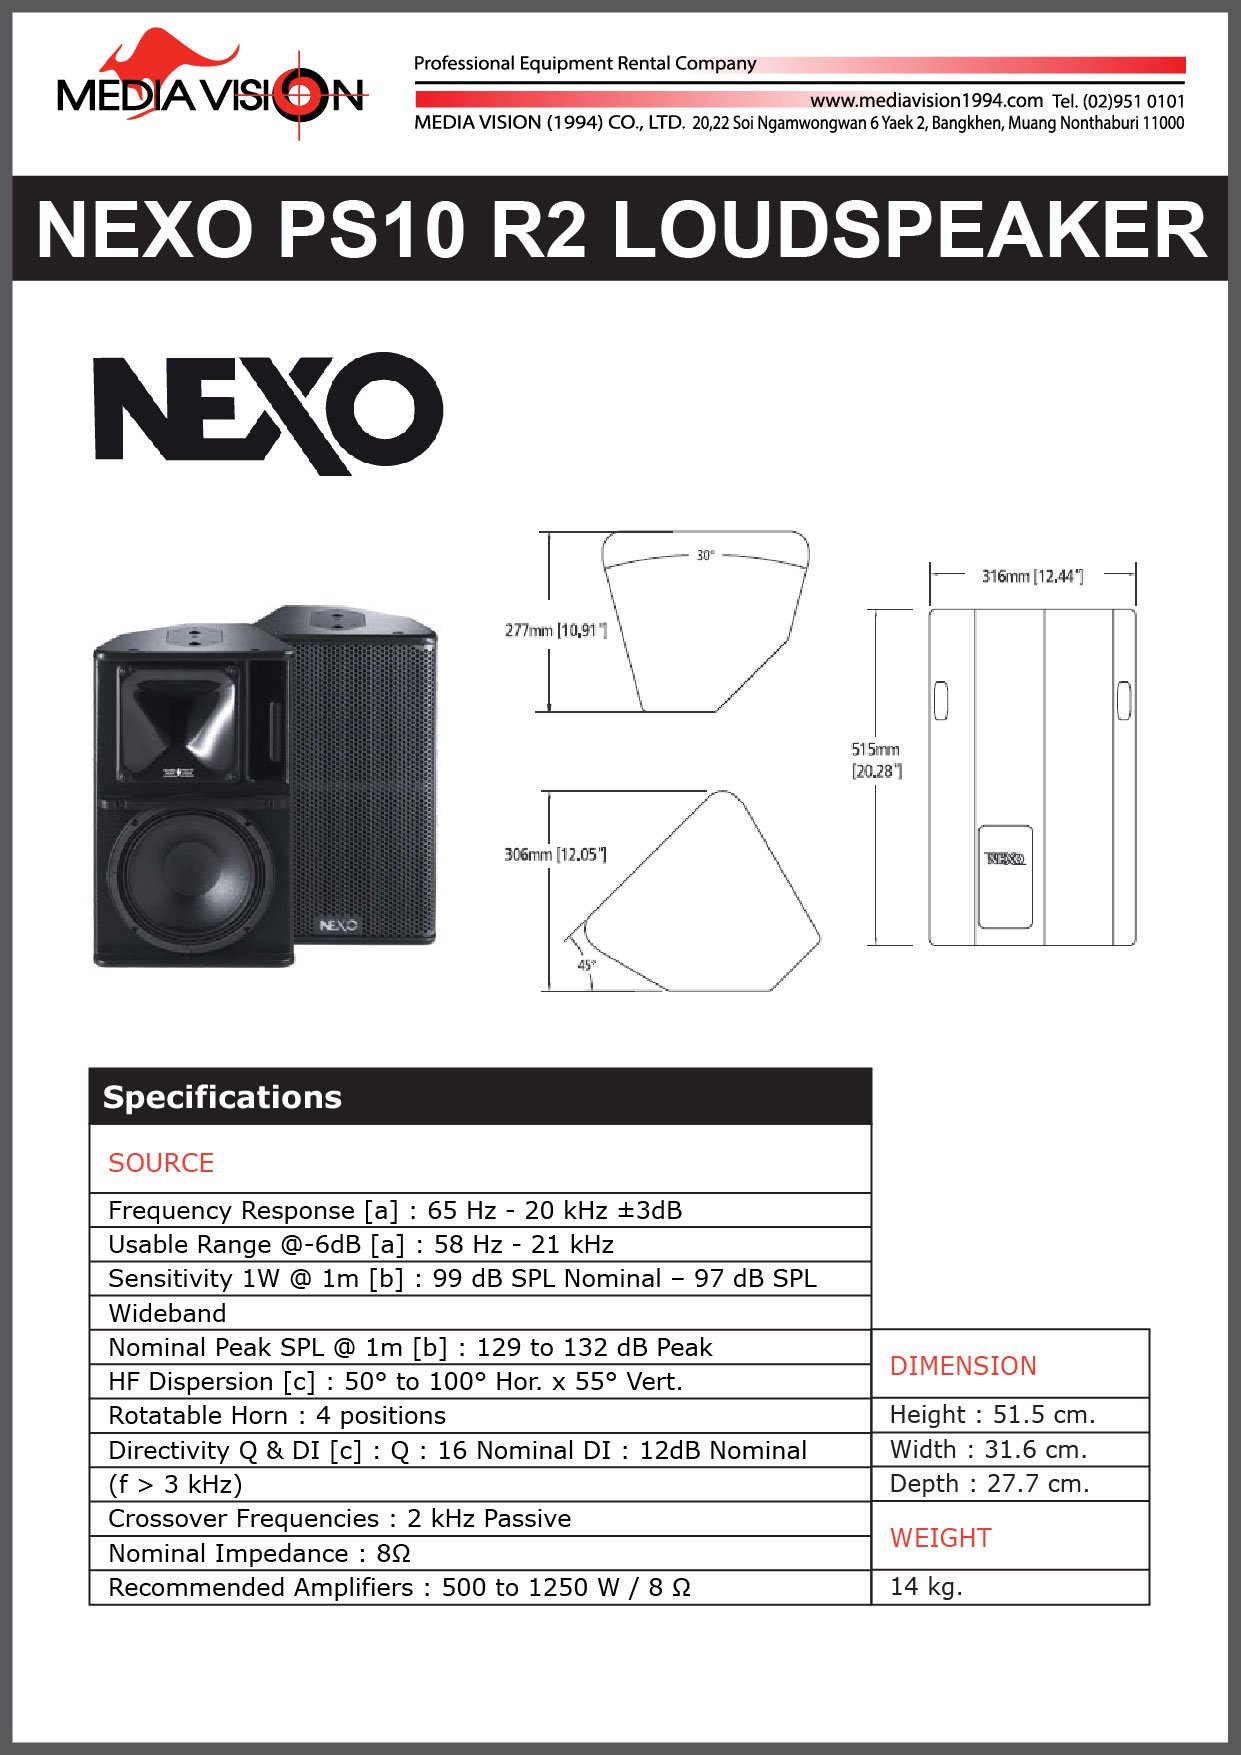 NEXO PS10 R2 LOUDSPEAKER